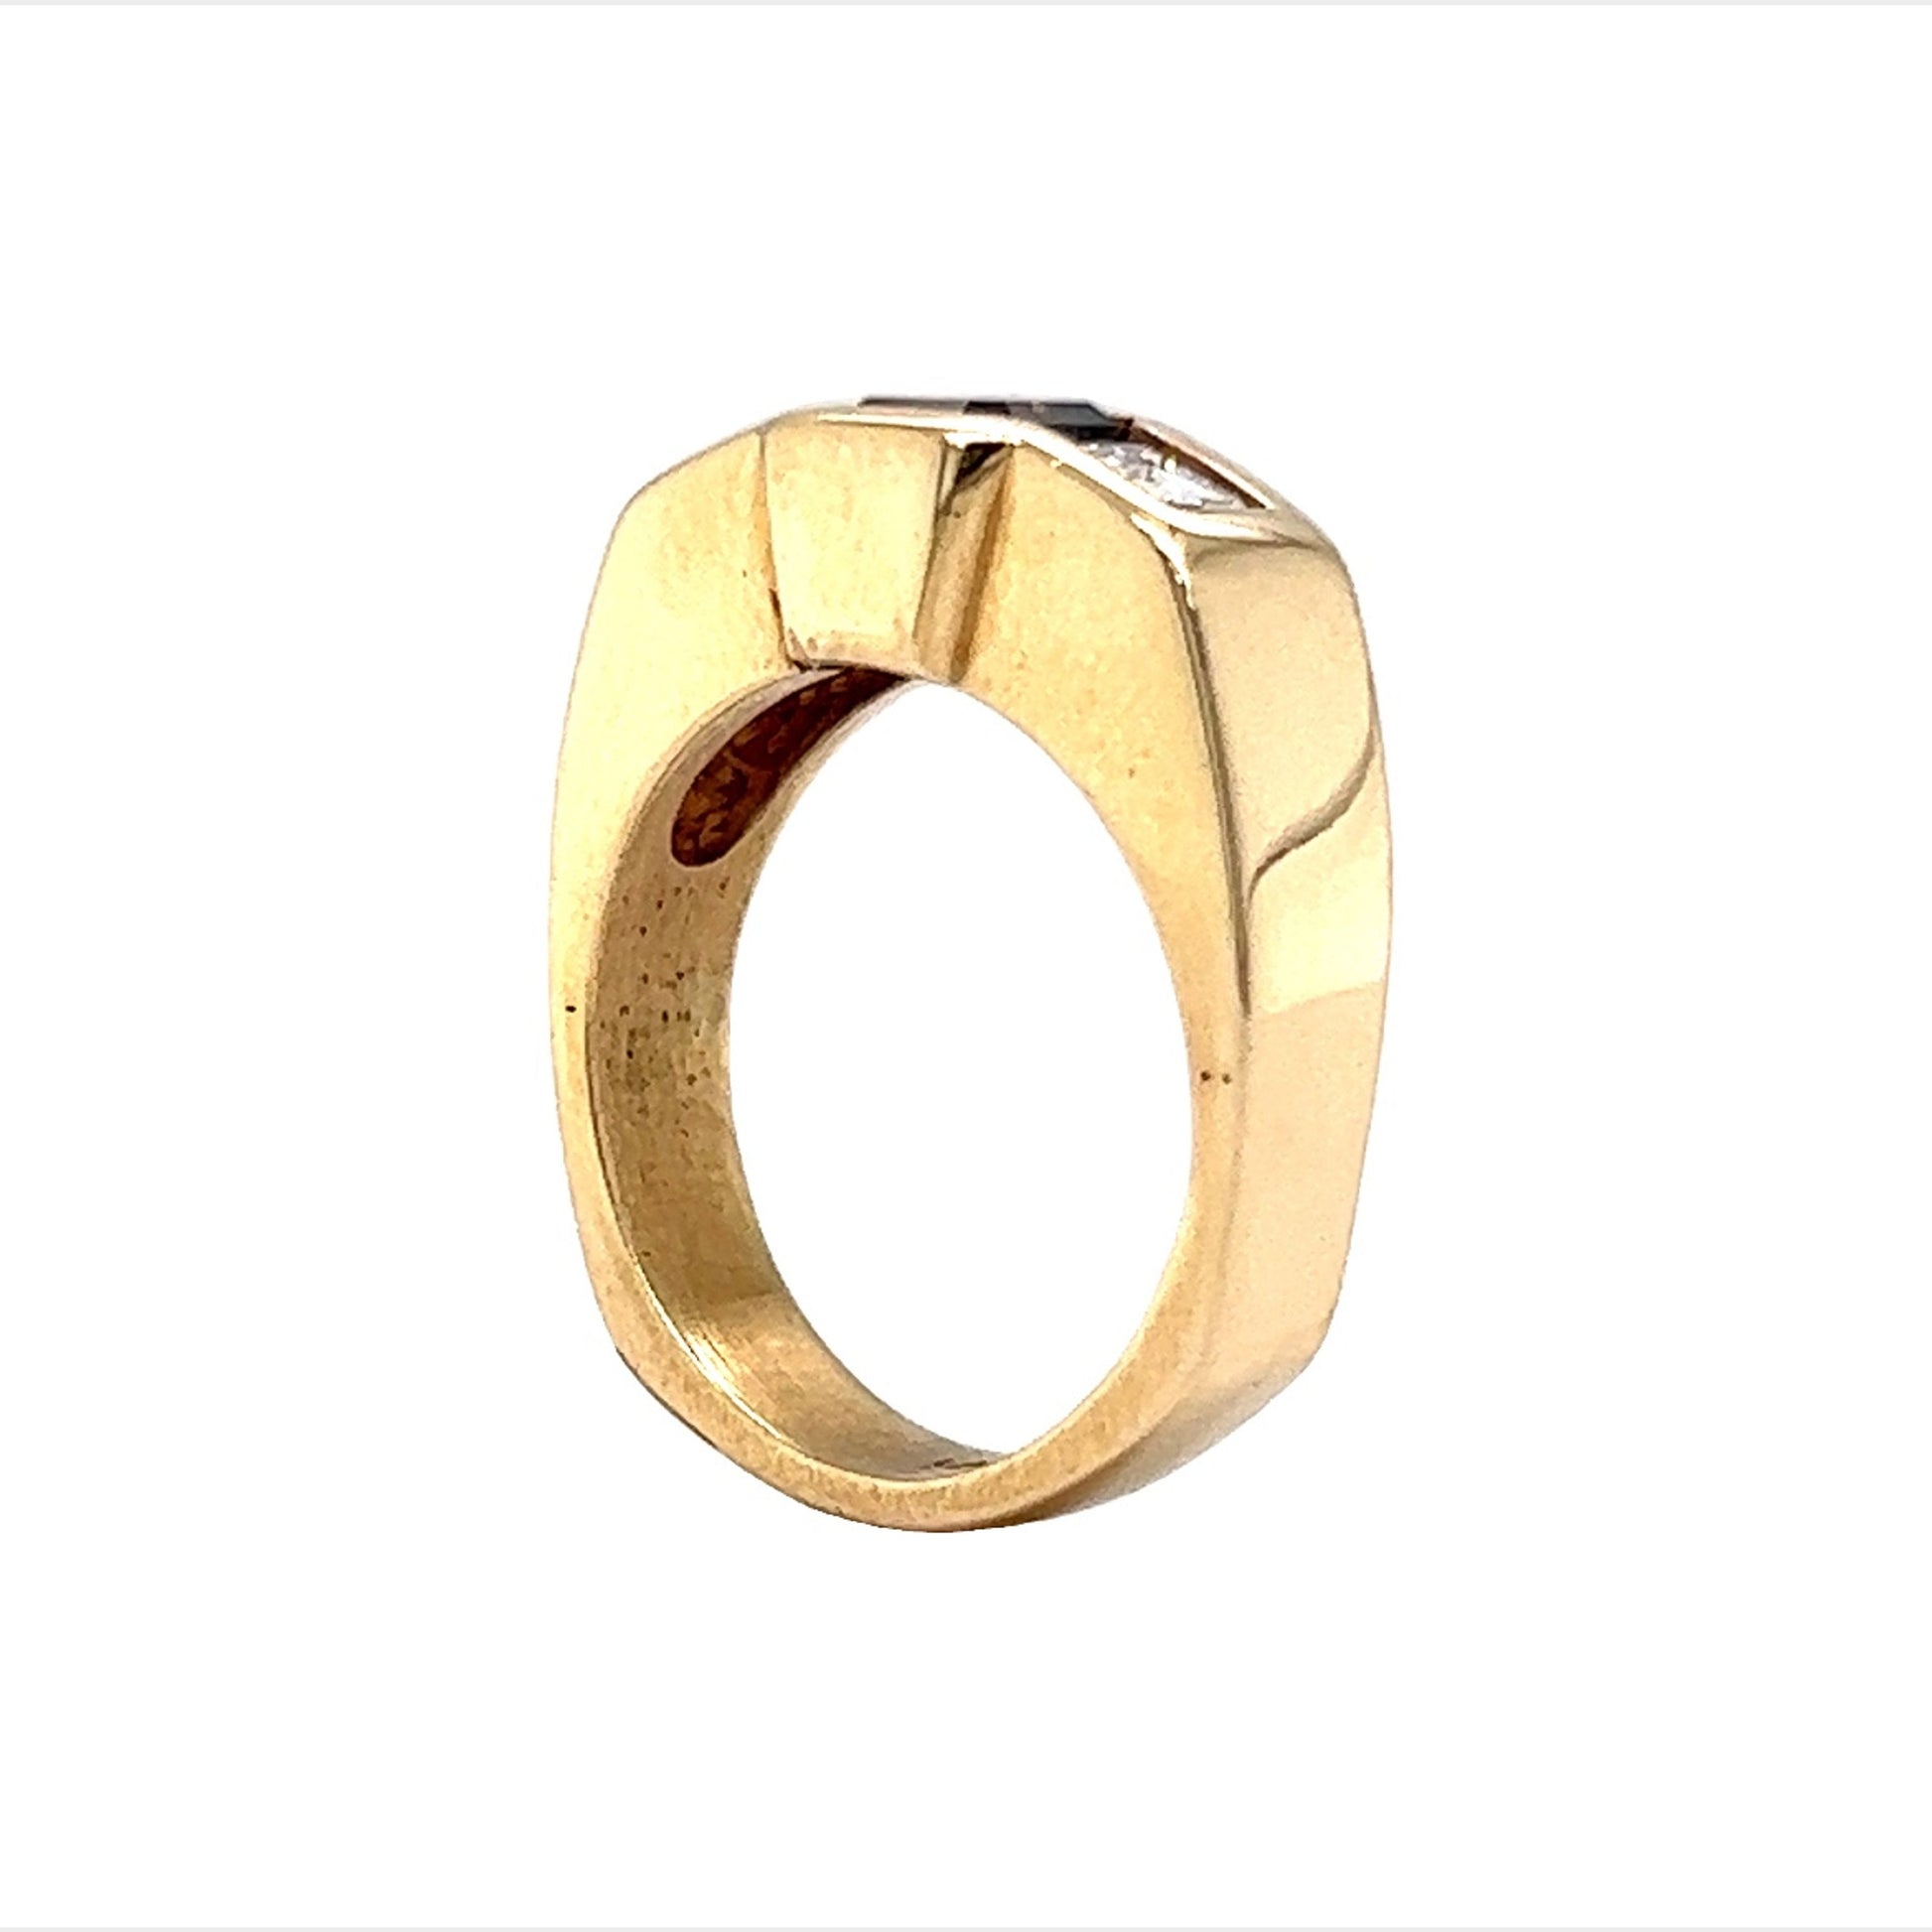 Bezel Set .80 Cognac Diamond Engagement Ring in 14k Yellow Gold